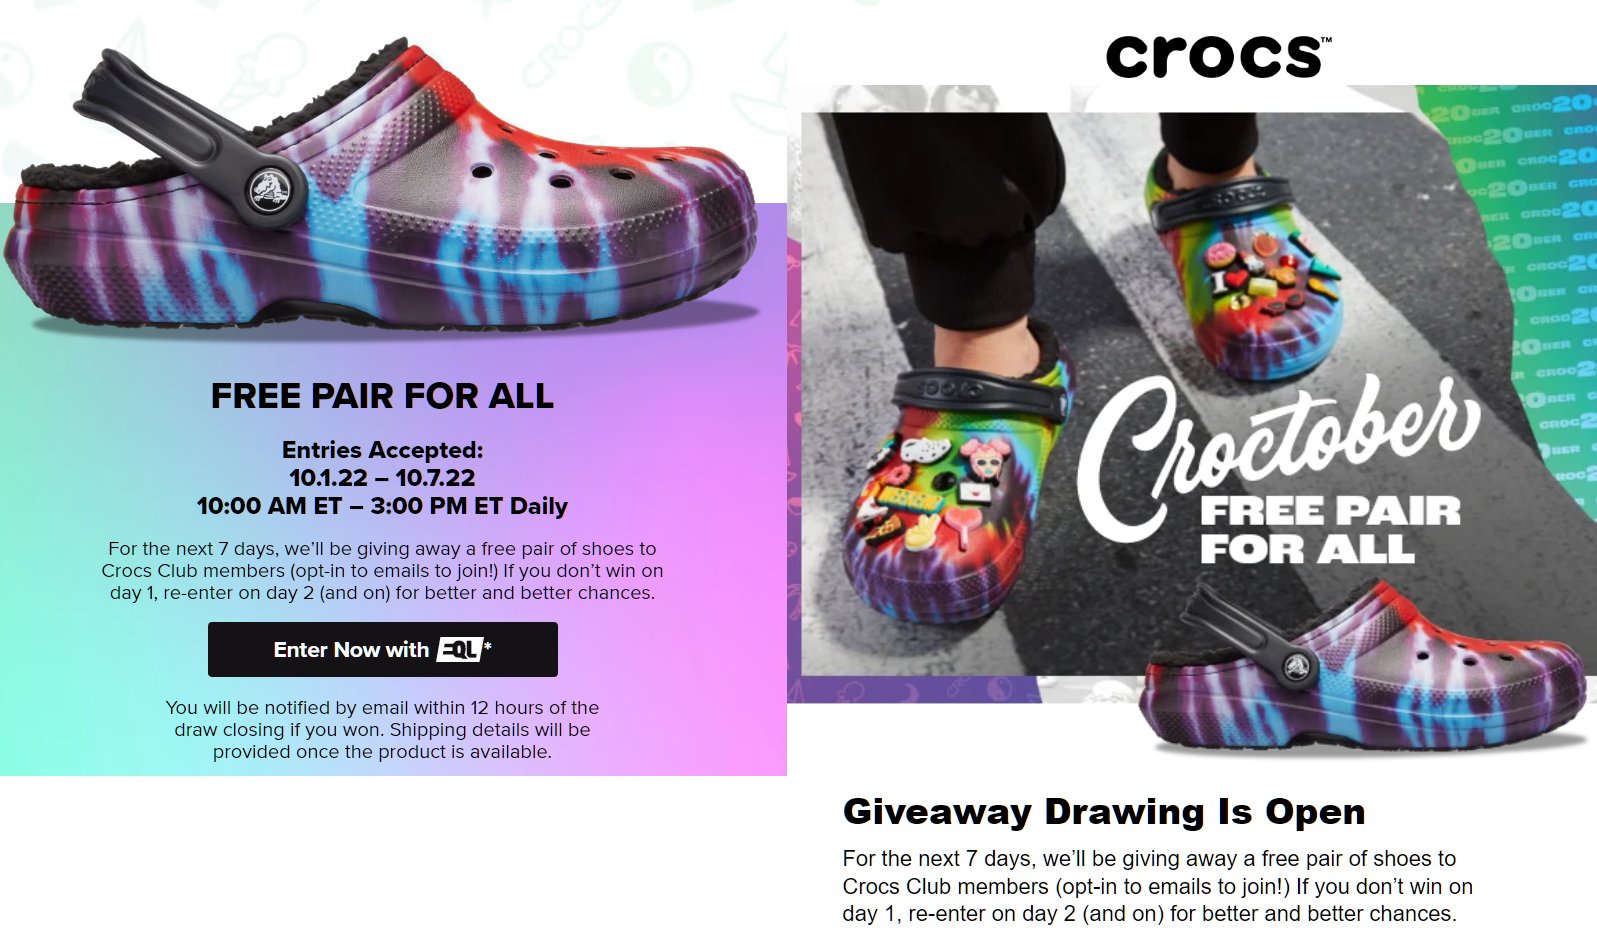 Crocs 官网现有免费送一万对毛毛洞洞鞋， 需要注册用户进行抽奖